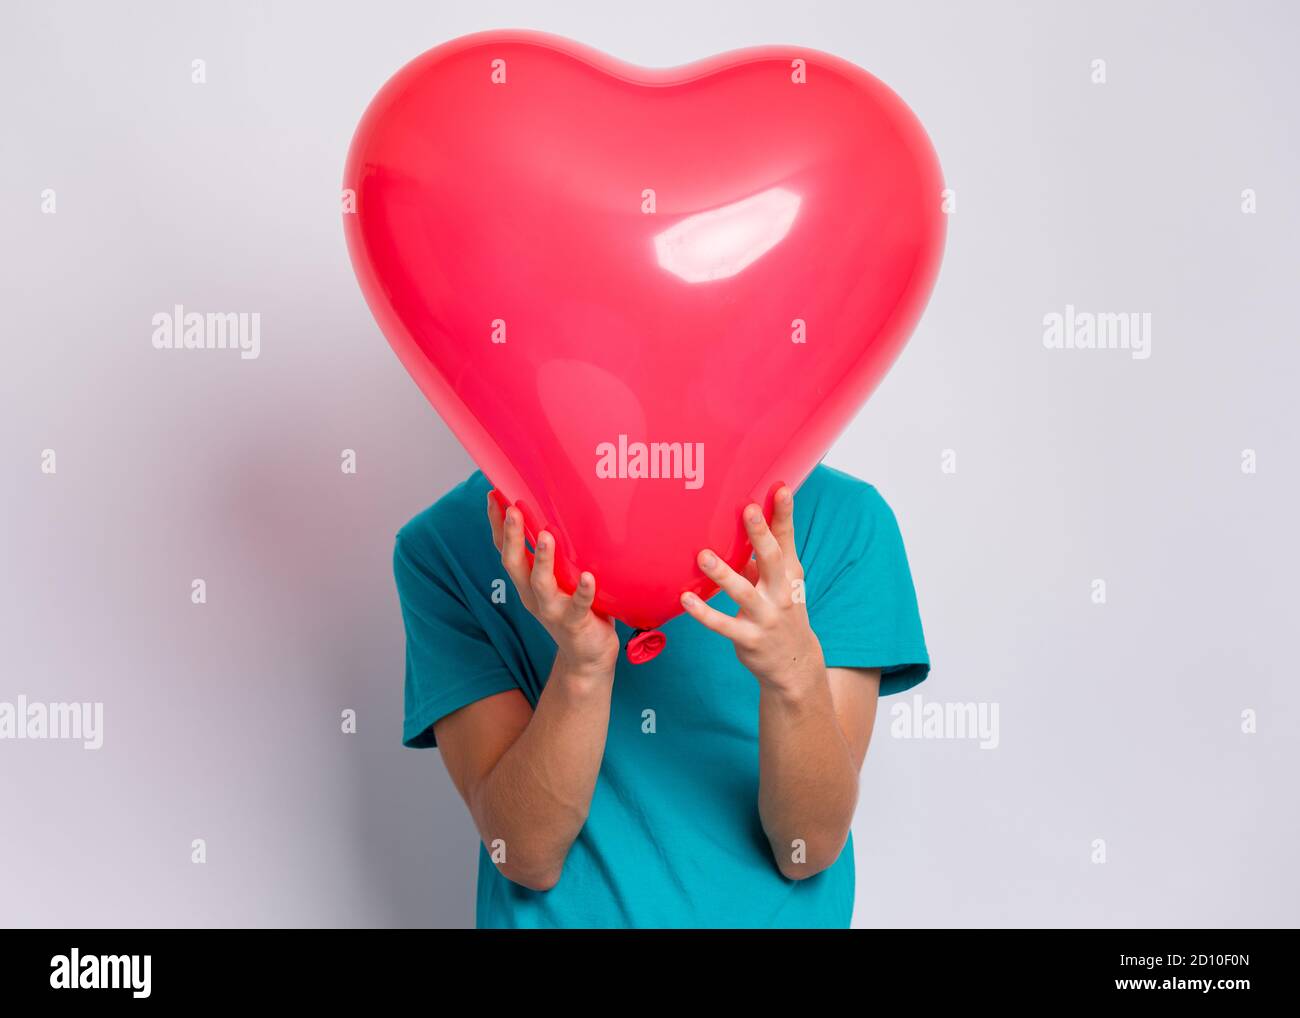 Boy with heart shaped balloon Stock Photo